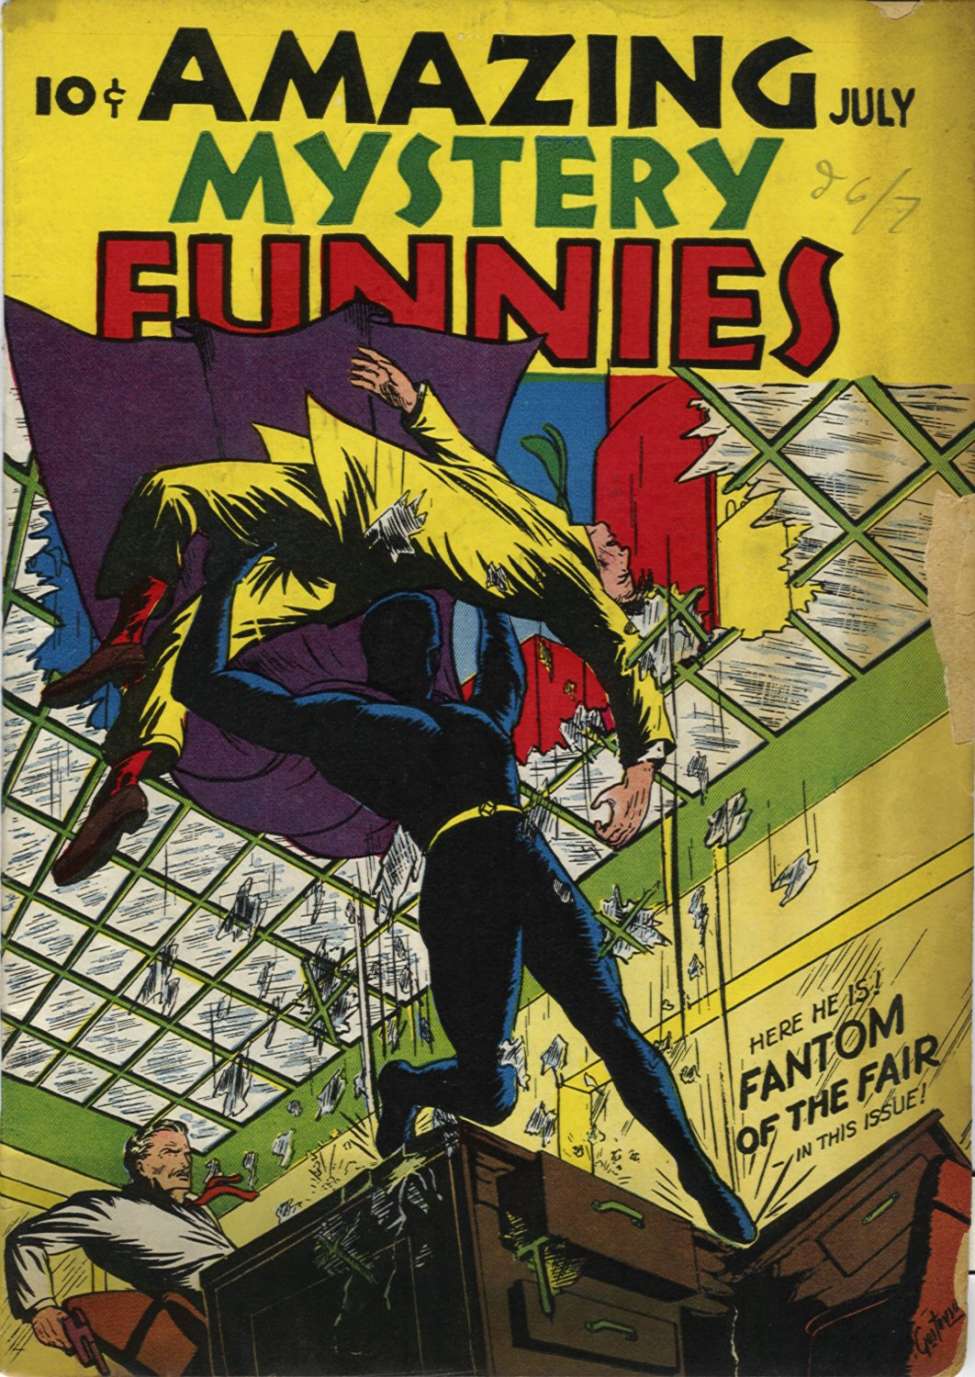 Comic Book Cover For Fantom of the Fair Archive Vol 1 (Centaur)